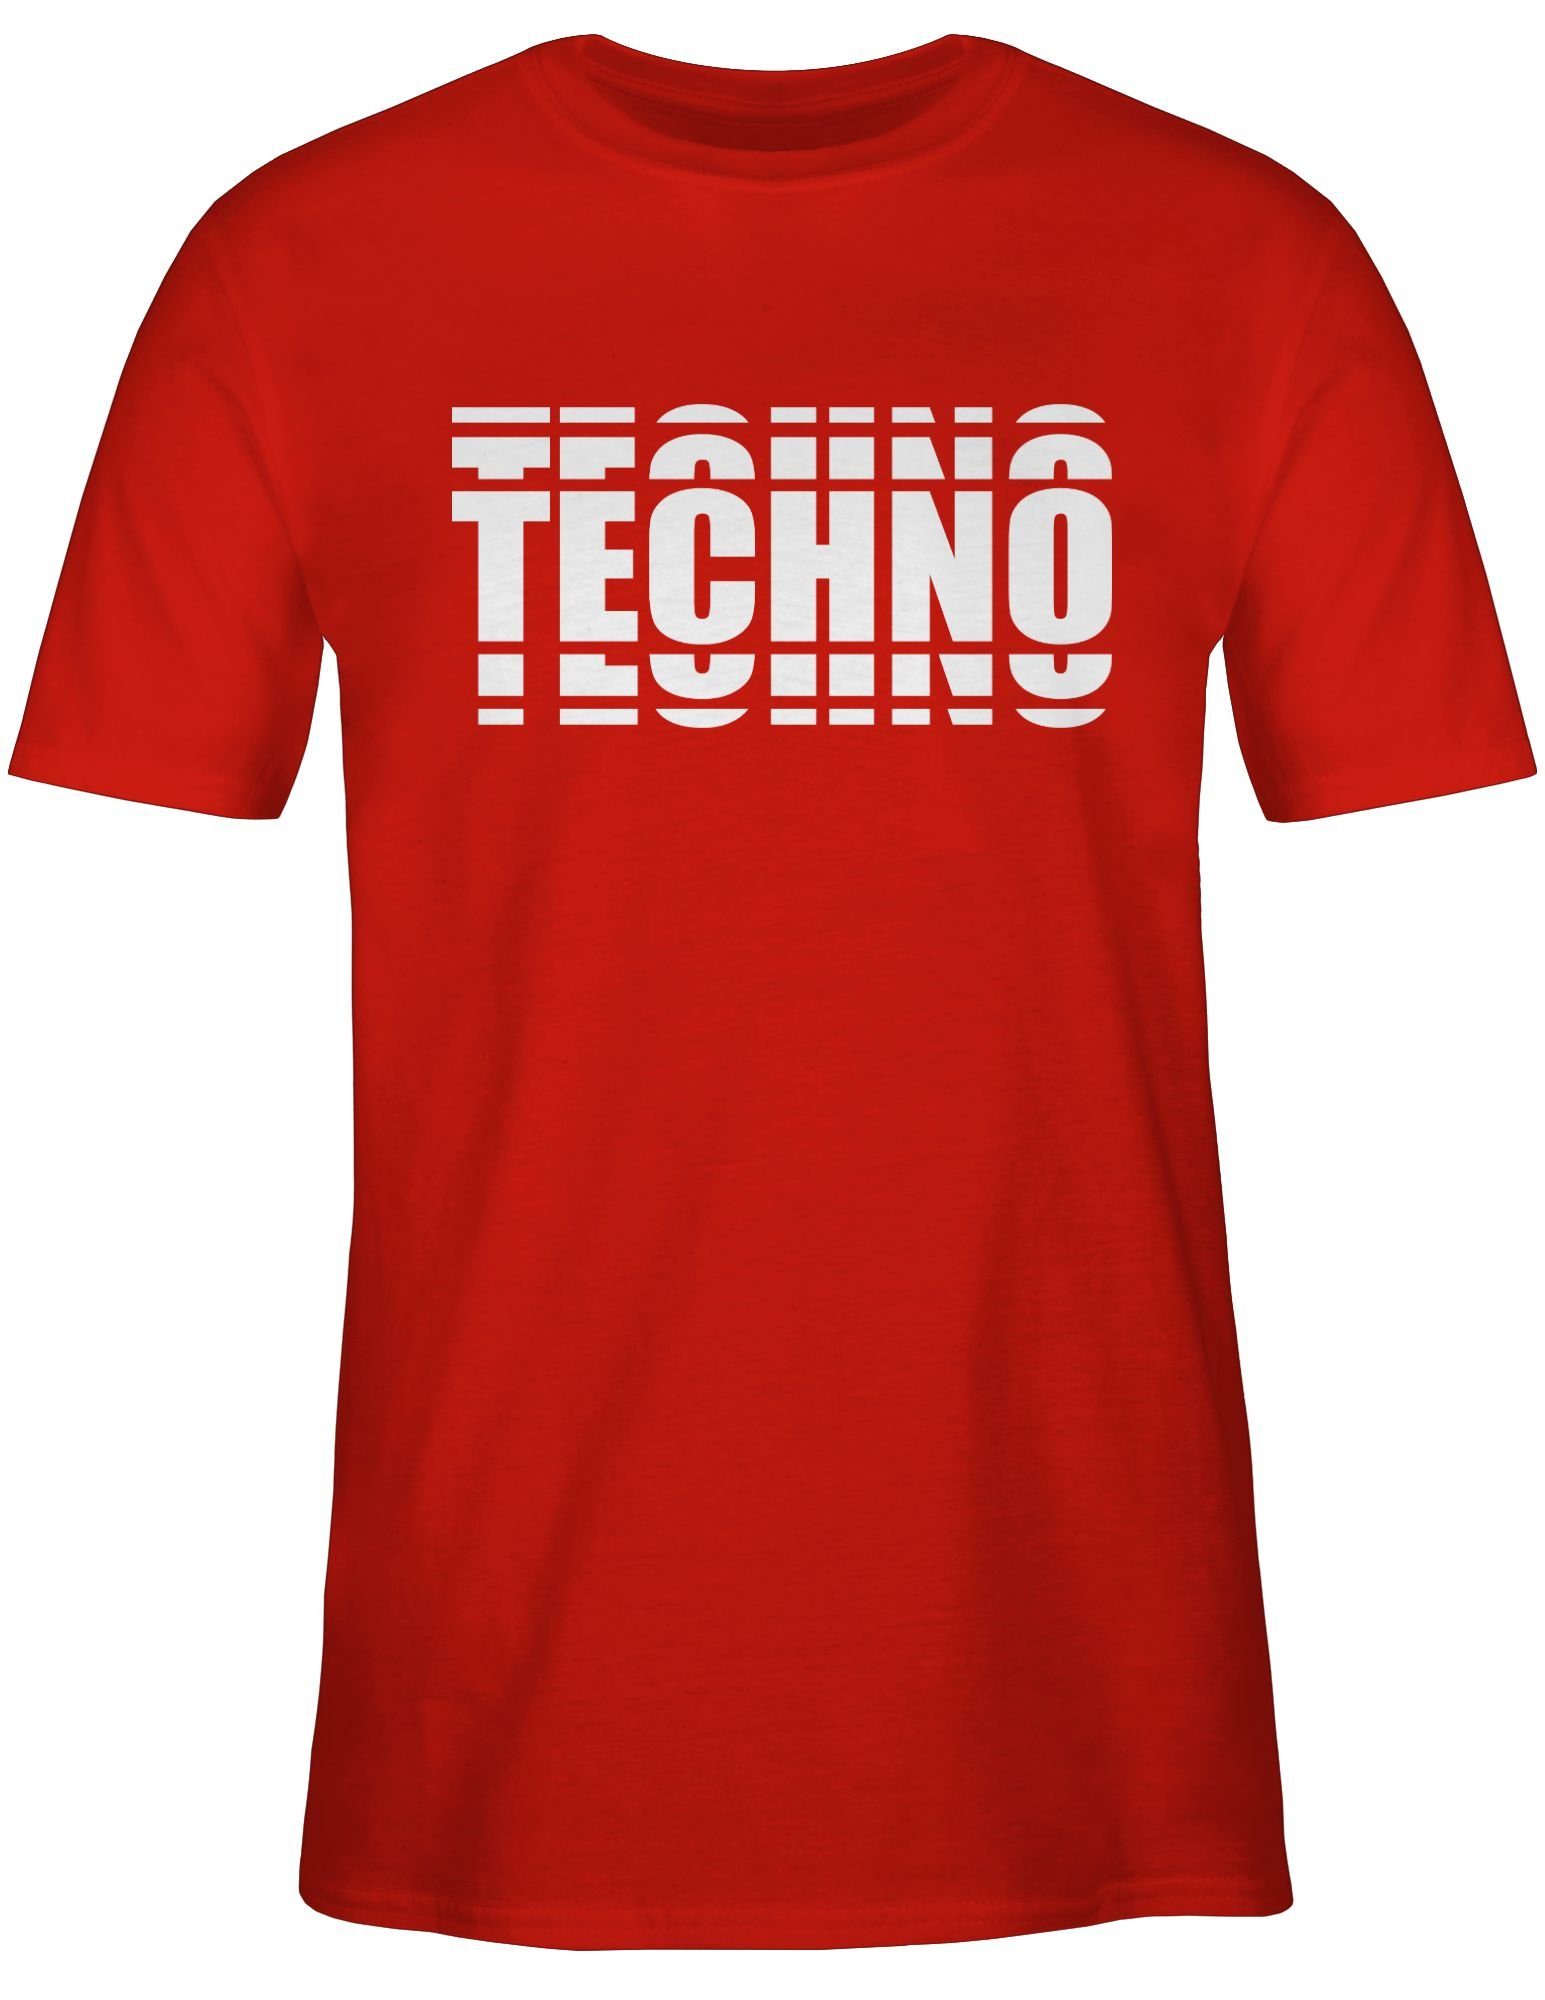 Shirtracer T-Shirt Techno in Grafischem Rot Muster Zubehör Festival 03